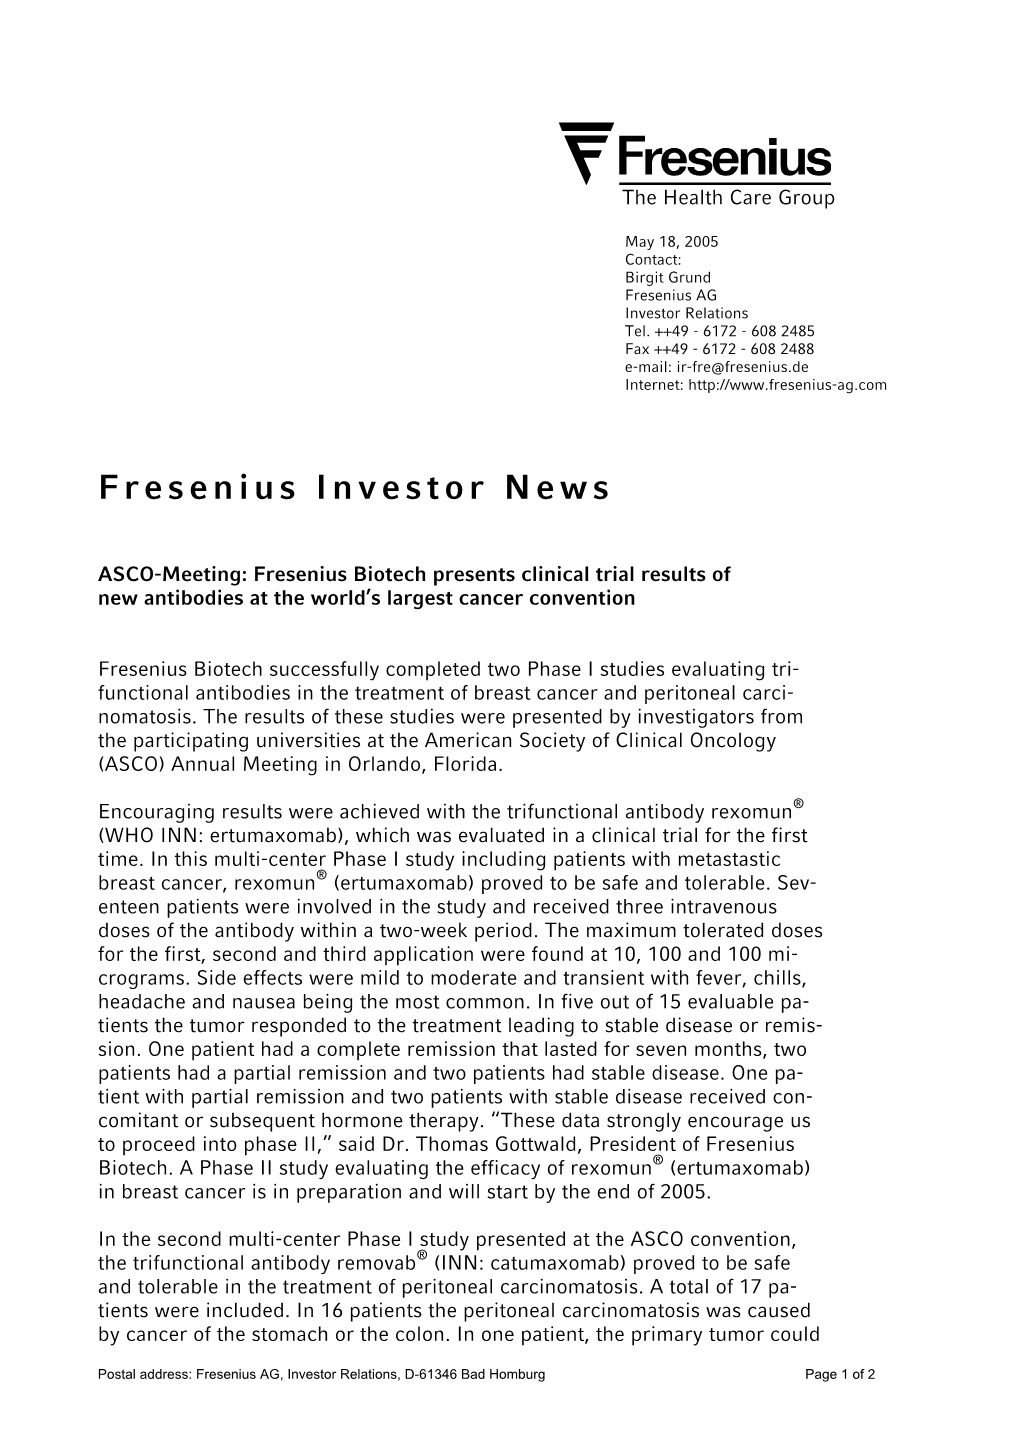 Fresenius Investor News